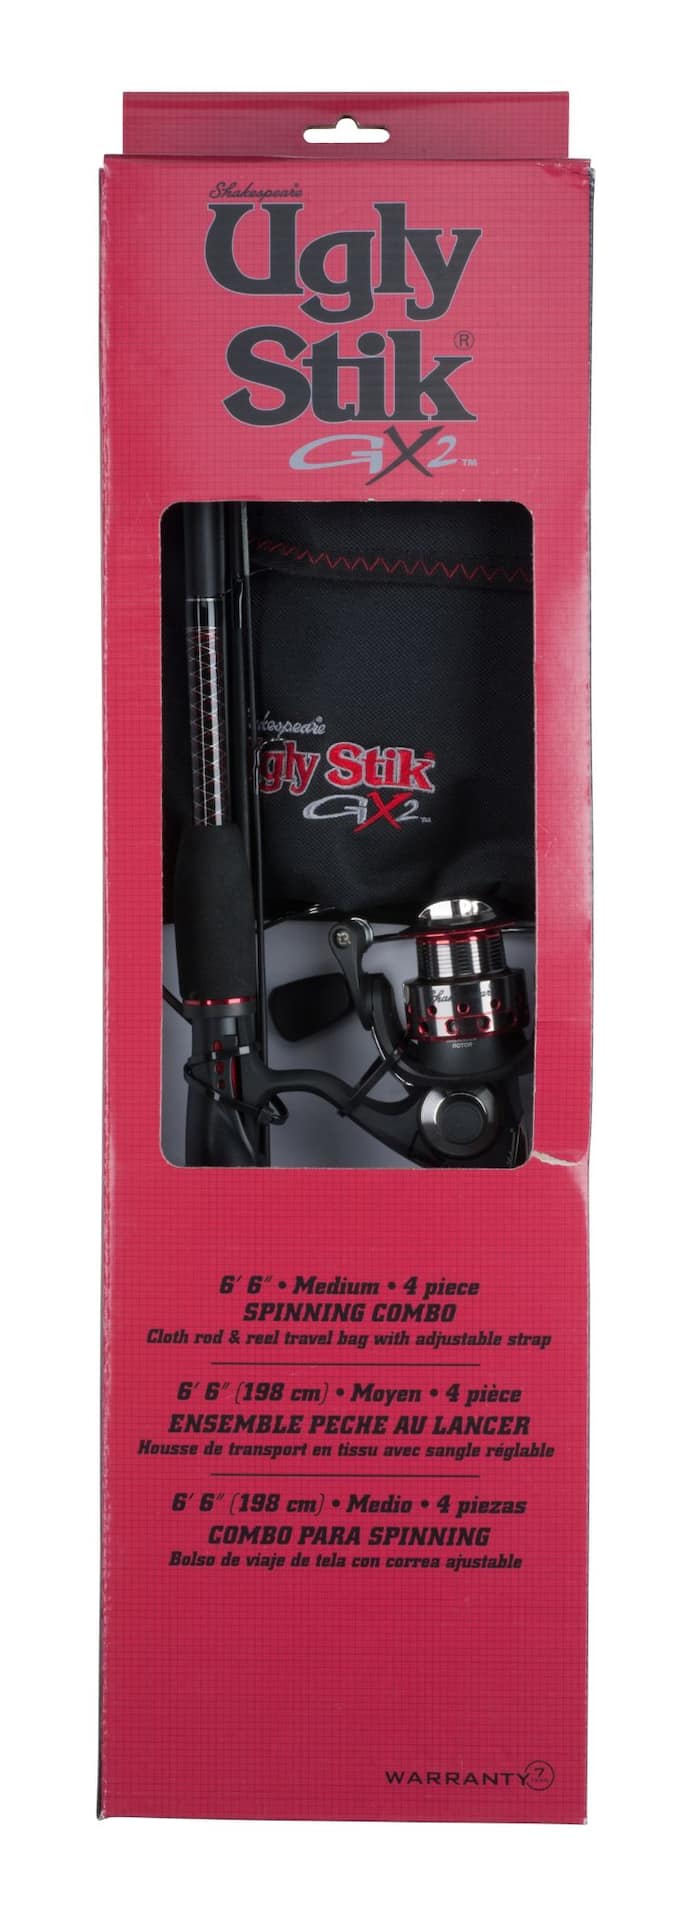 Ugly Stik GX2 Travel Spinning Fishing Rod and Reel Combo, Medium, 6.6-ft, 4- pc